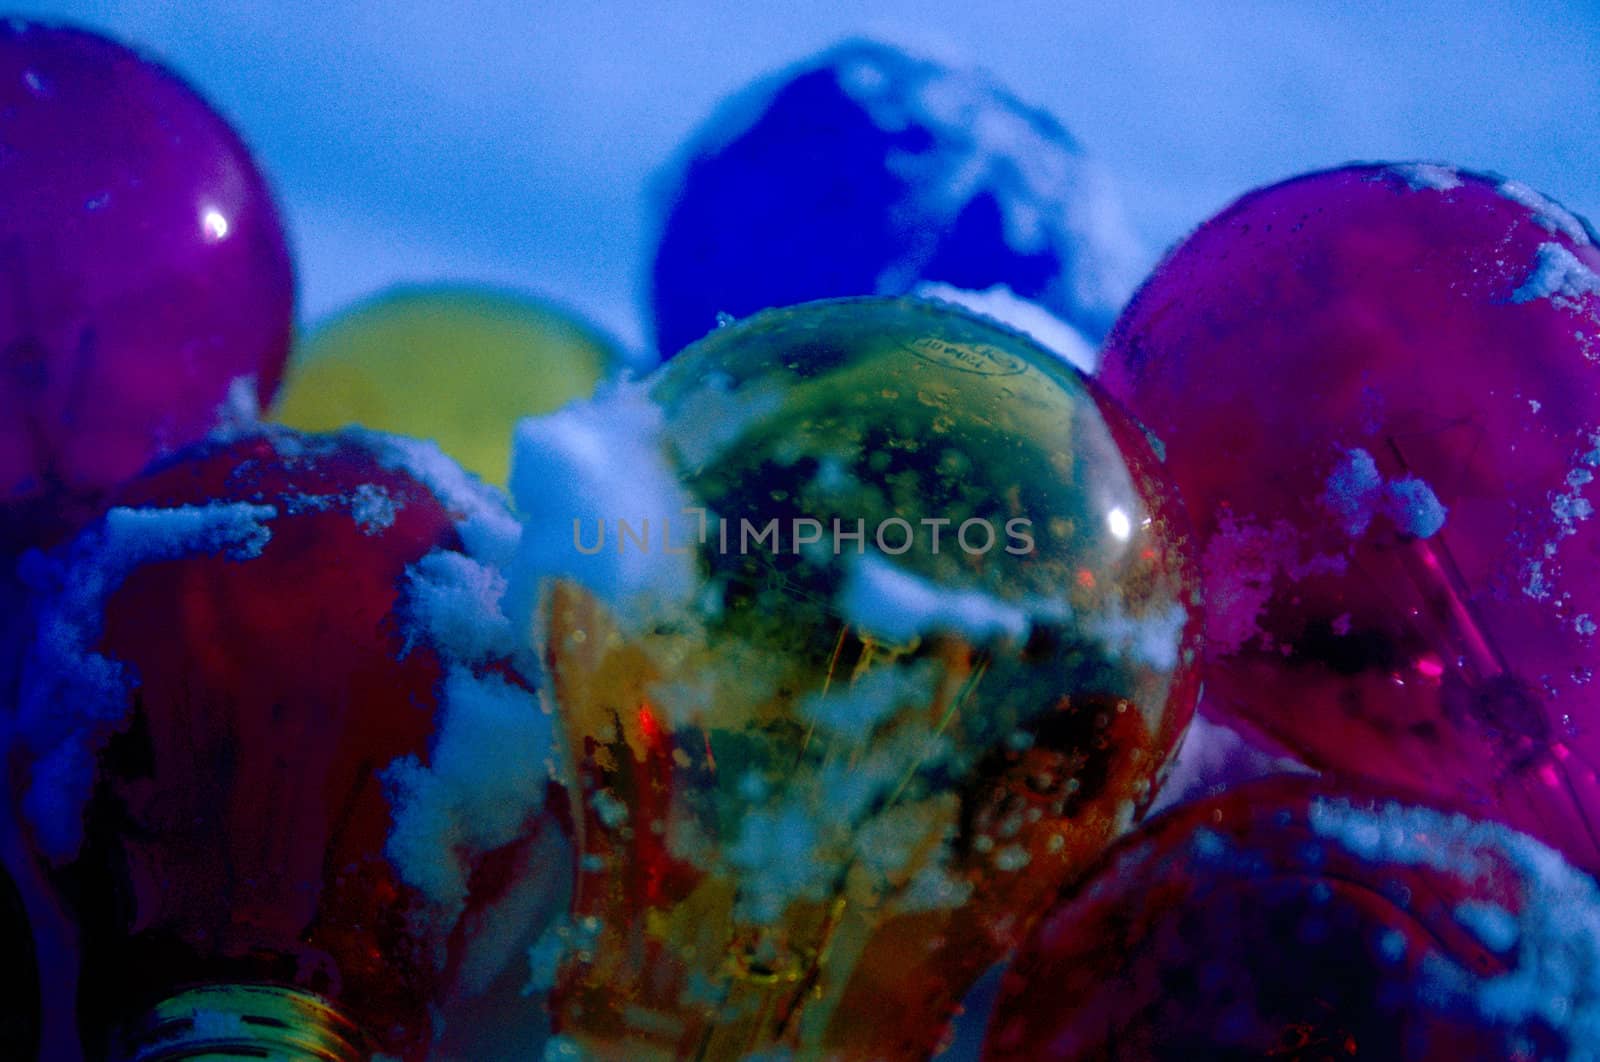 Ice Bulb by mypstudio